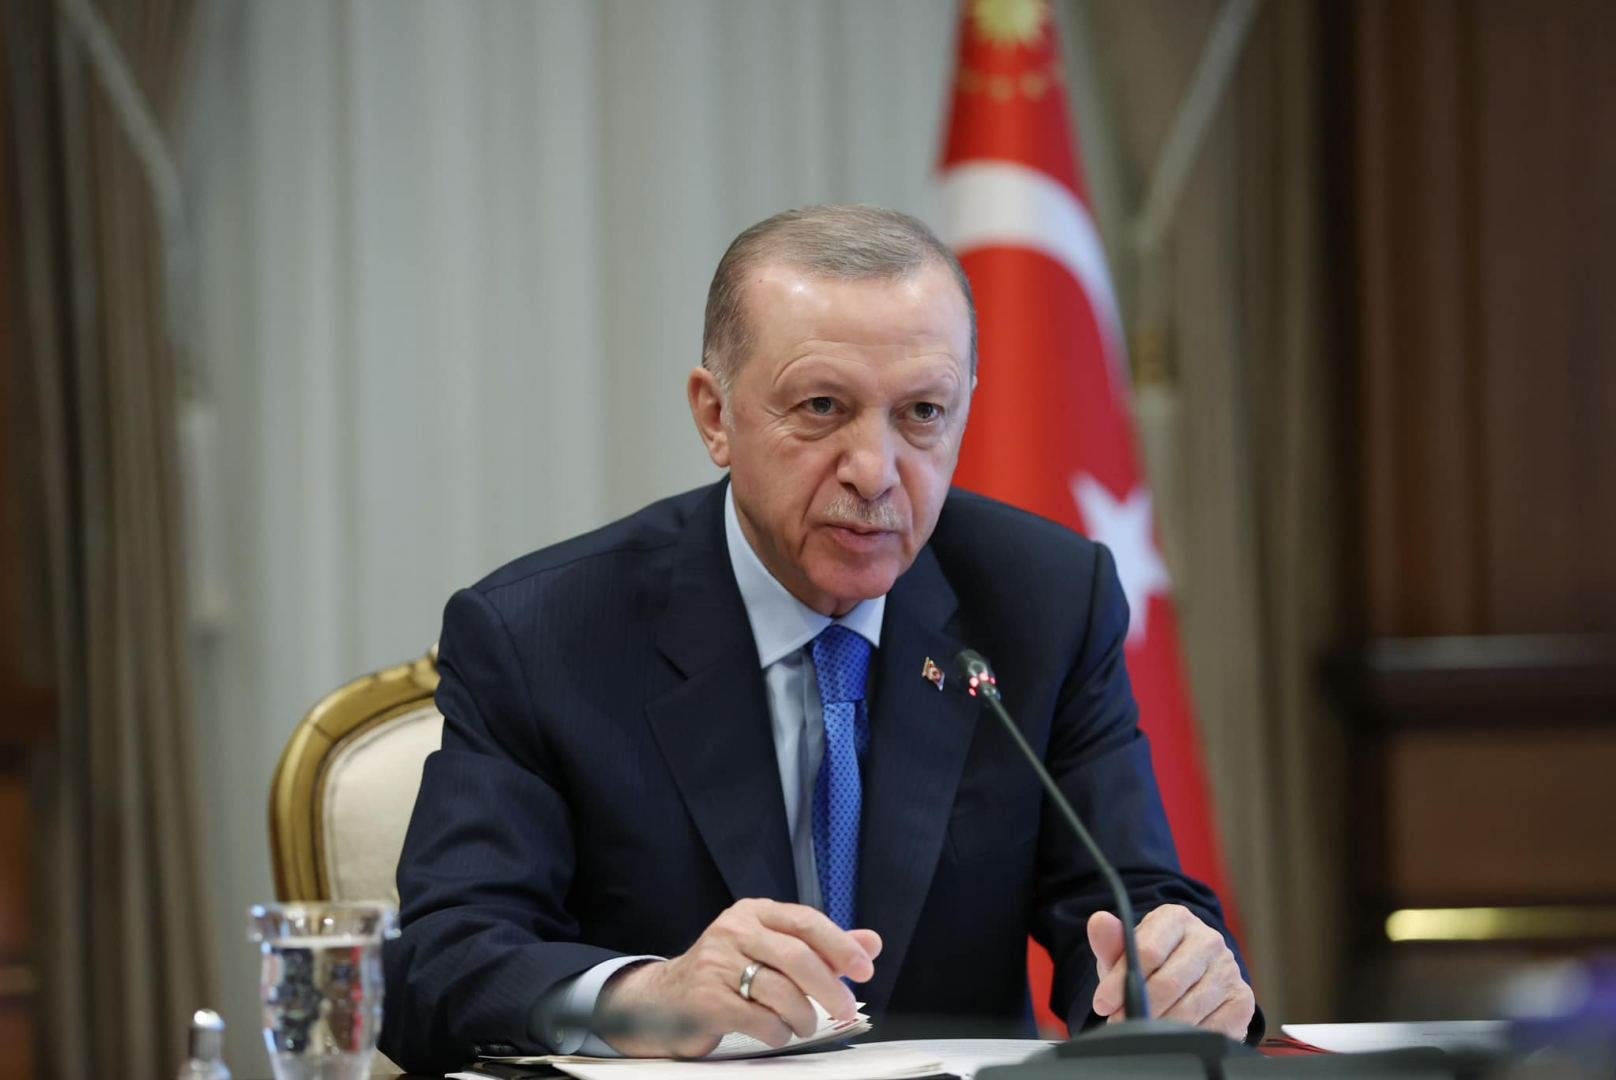 Türkiye plays active role in peace talks between Azerbaijan, Armenia - Turkish President